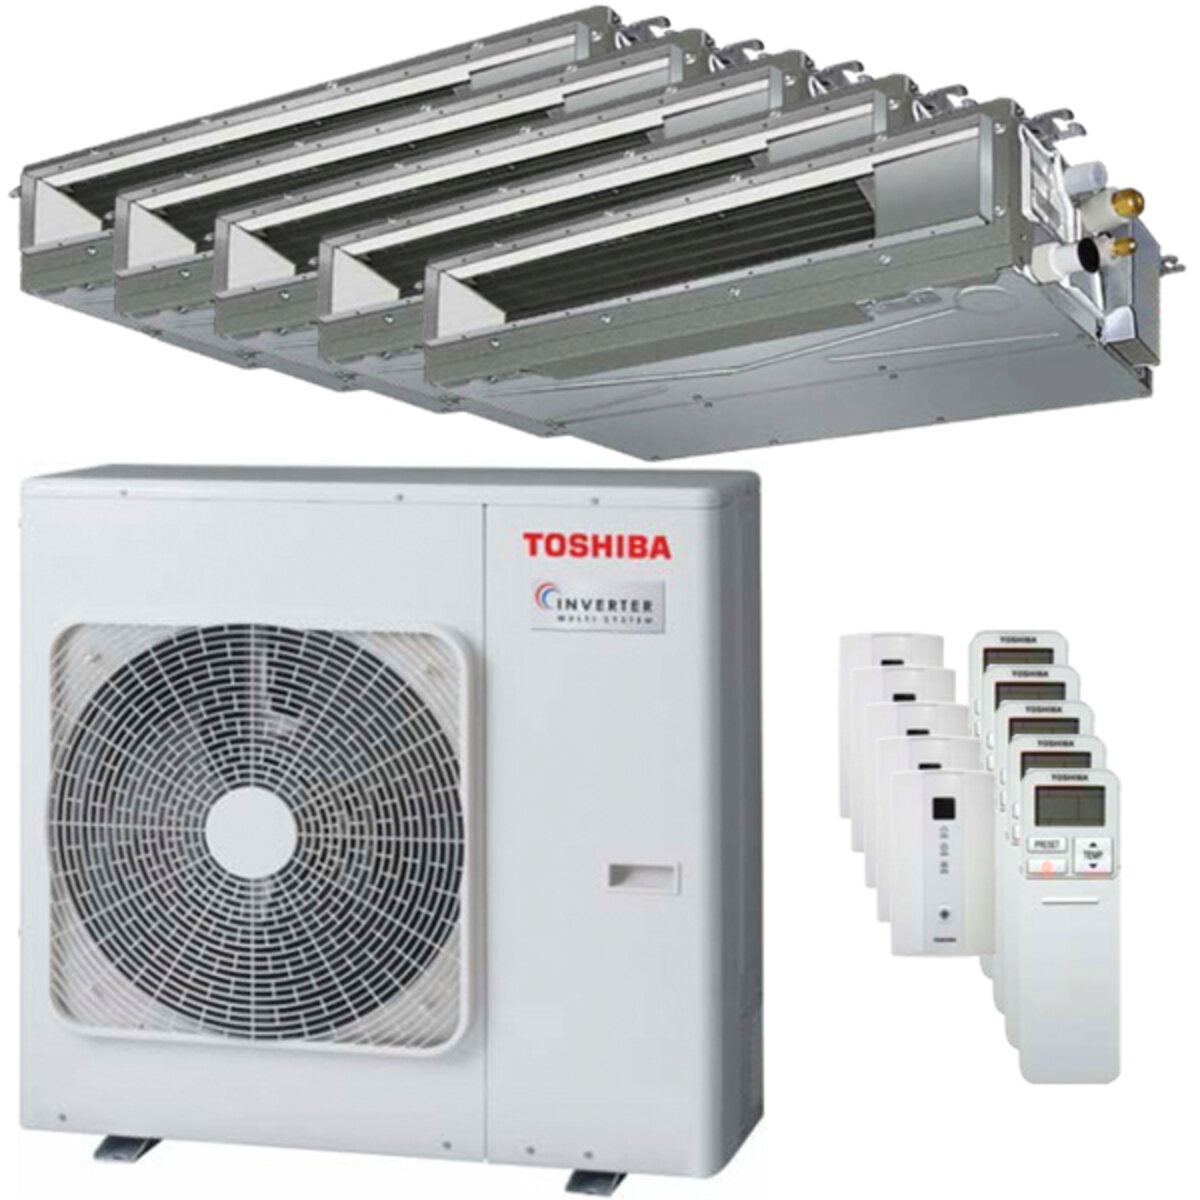 Toshiba Ductable Air Conditioner U2 penta split 9000 + 9000 + 9000 + 12000 + 12000 BTU inverter A ++ outdoor unit 10.0 kW